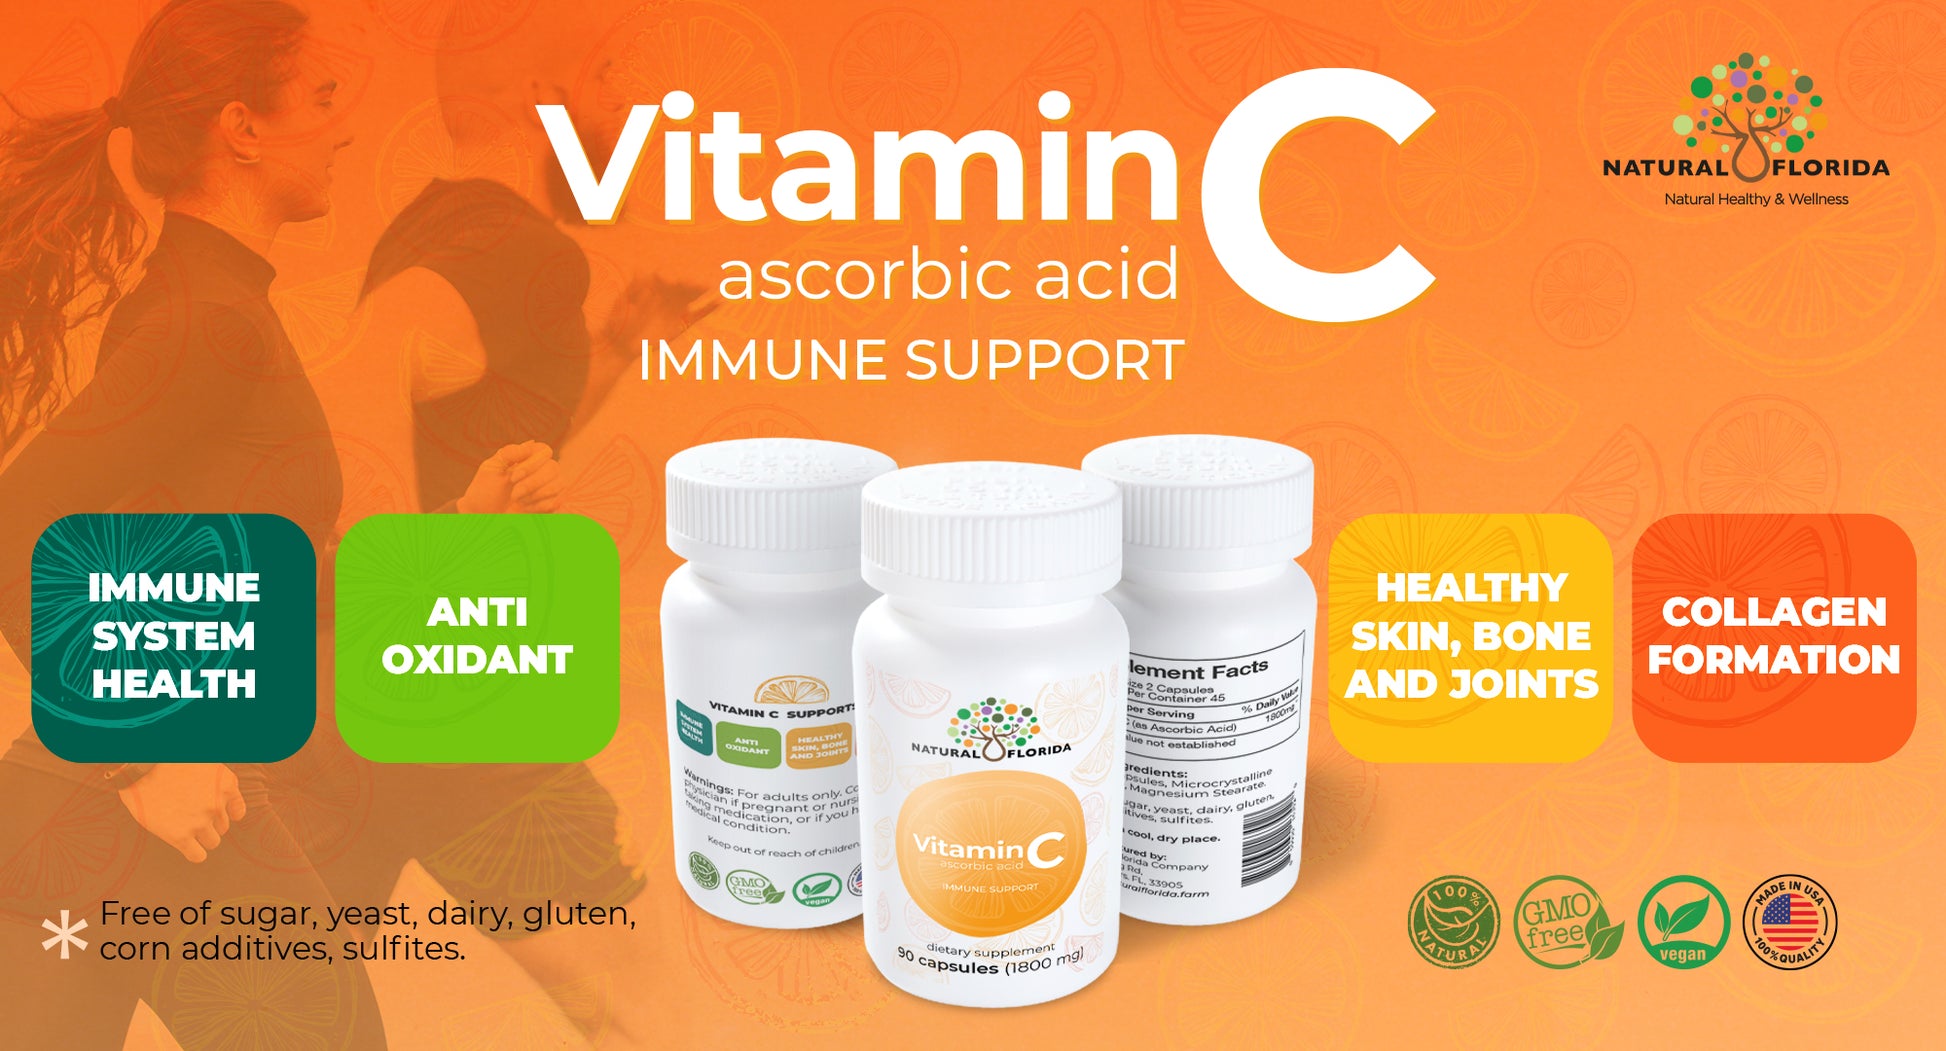 Vitamin C (Ascorbic Acid) benefits